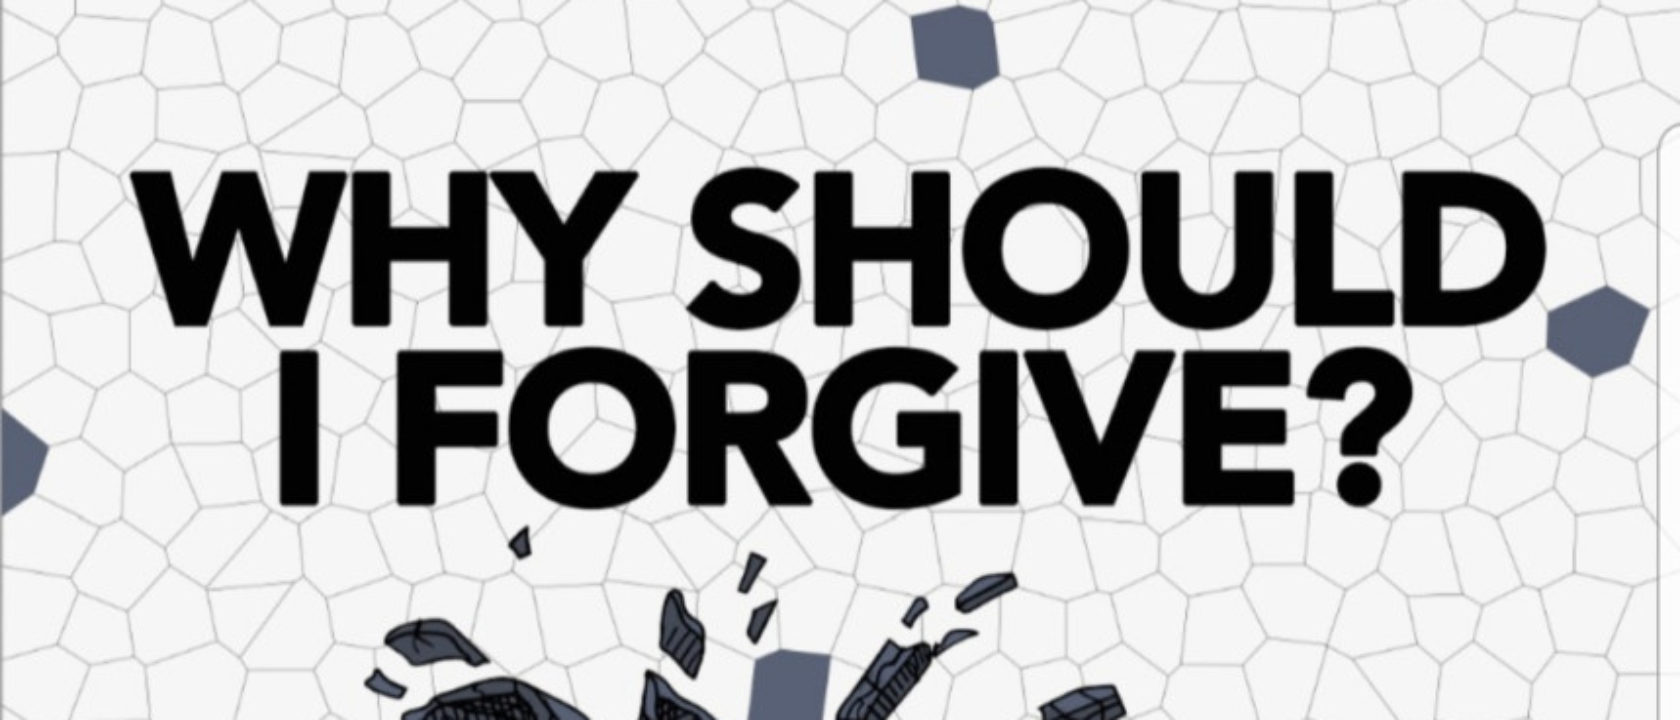 Why Should I forgive